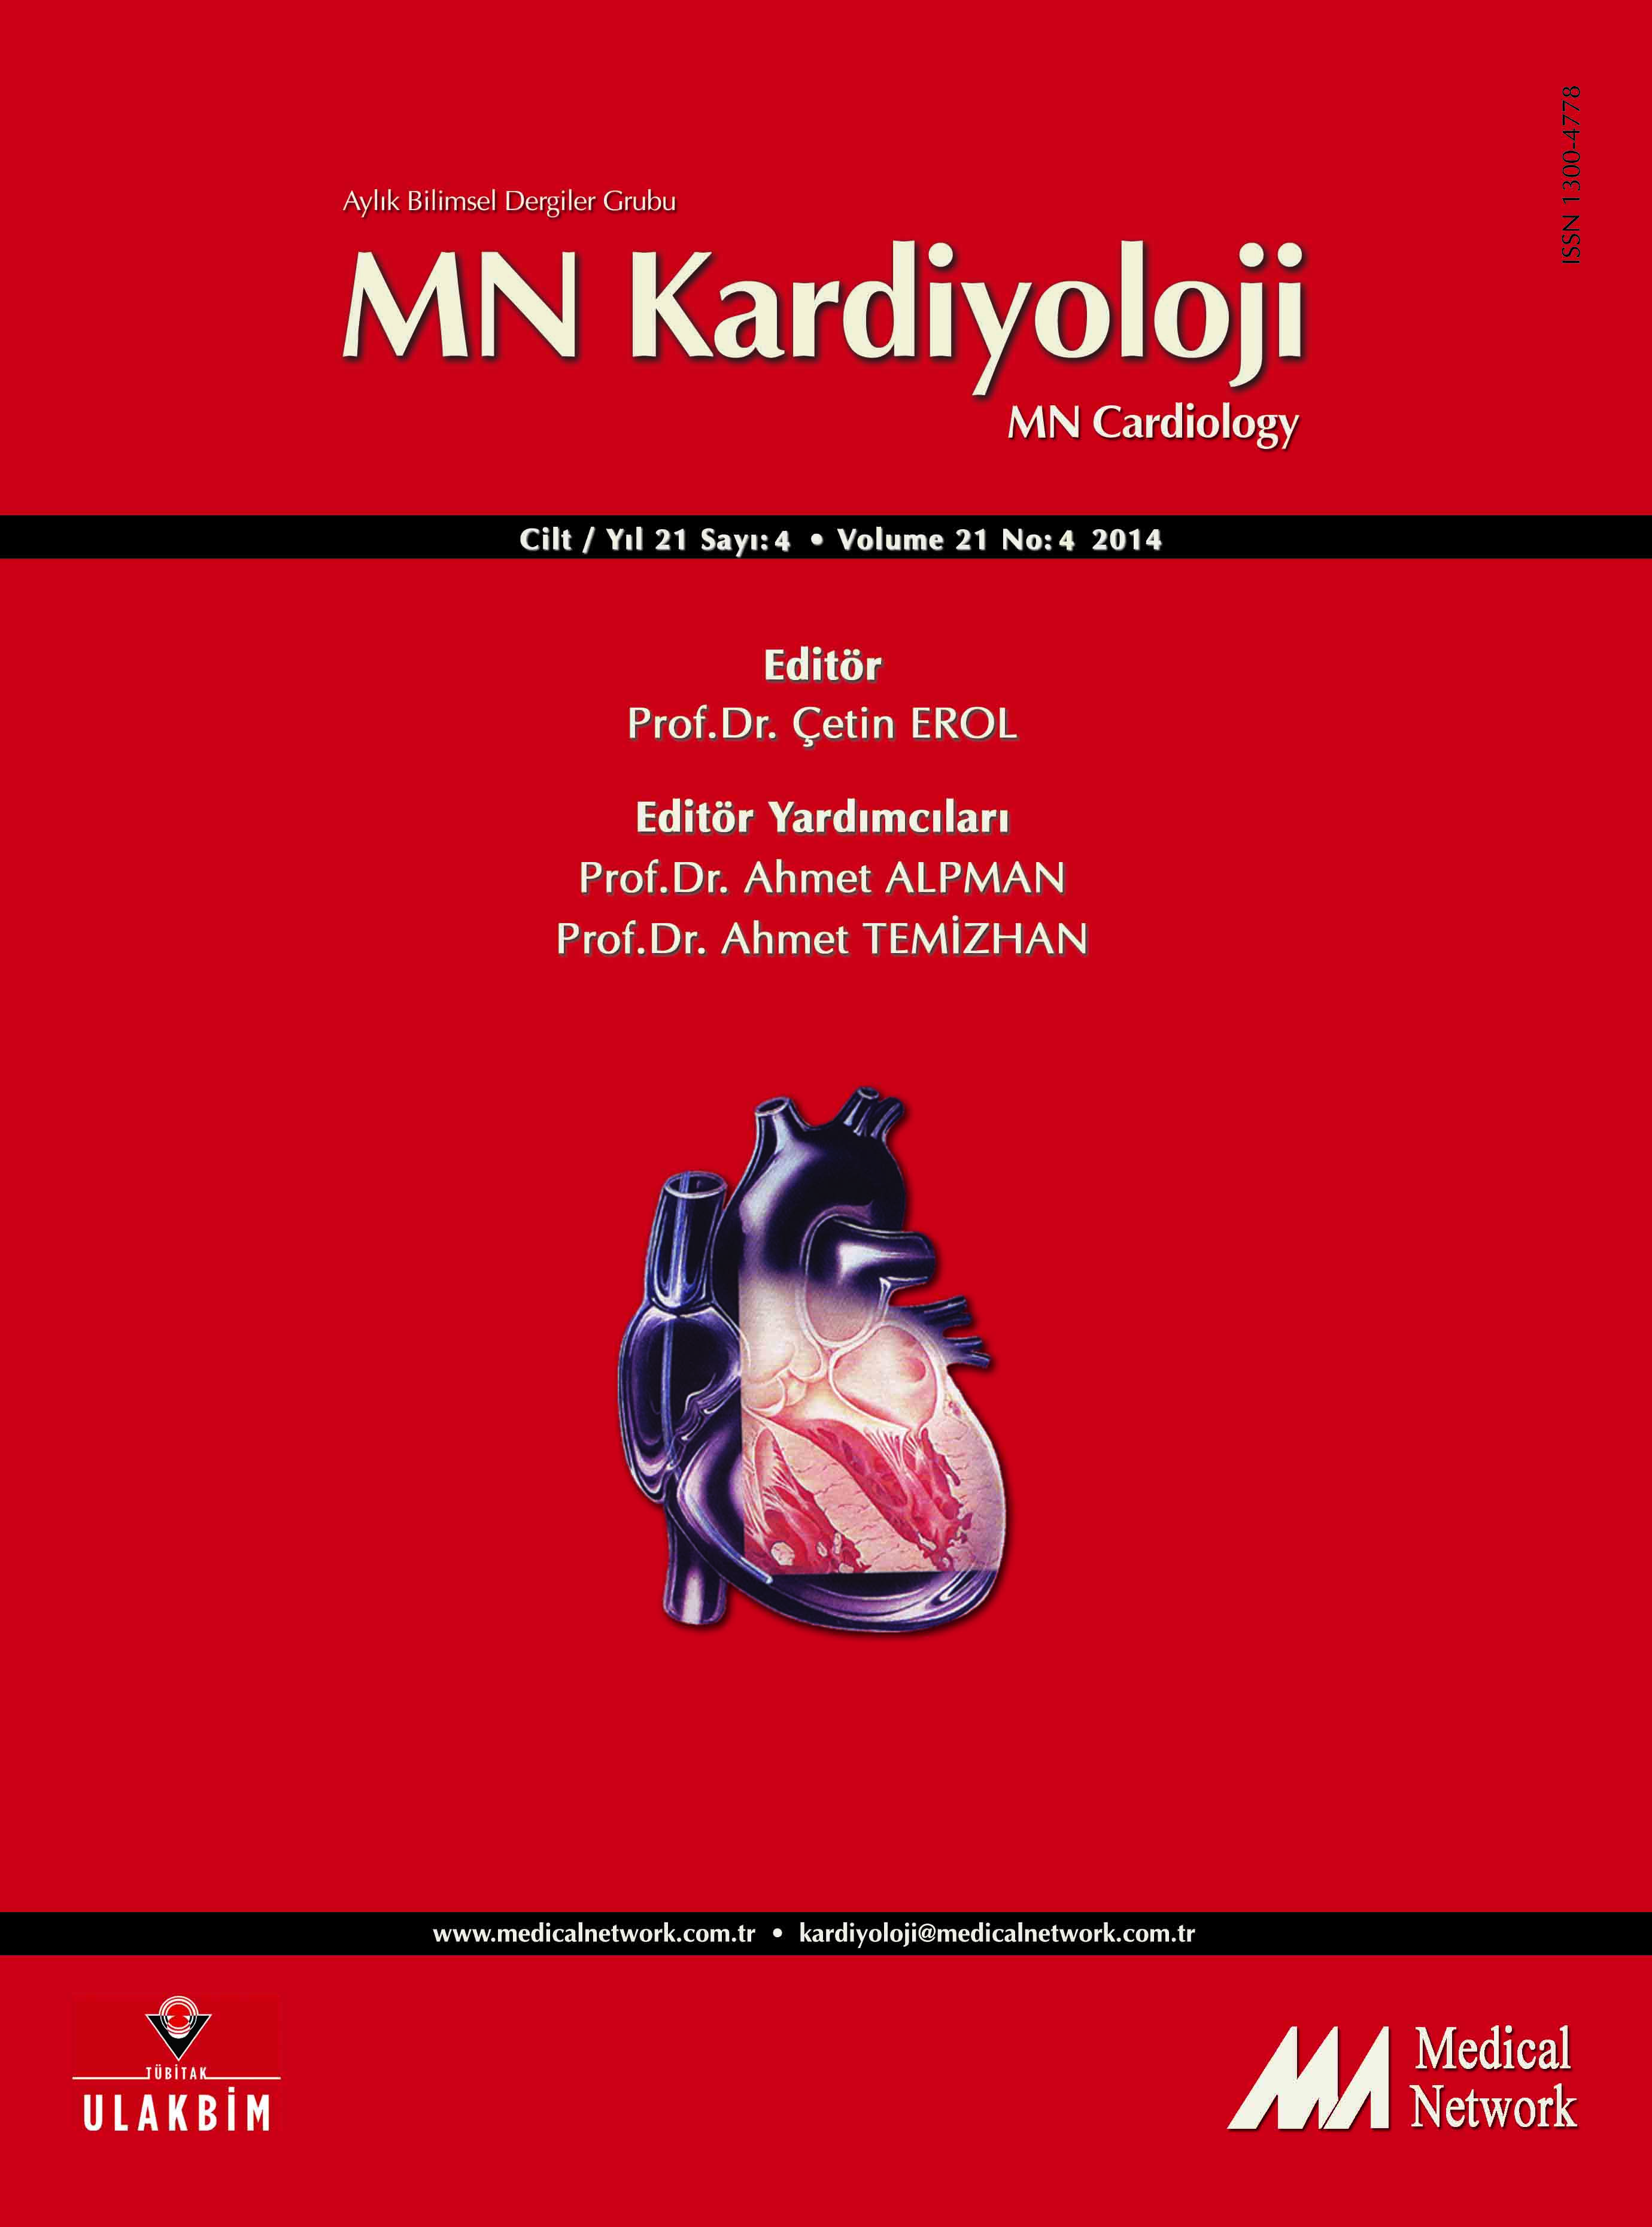 <p>MN Kardiyoloji Cilt: 21 Say: 4 2014 (MN Cardiology Volume: 21 No: 4 2014)</p>